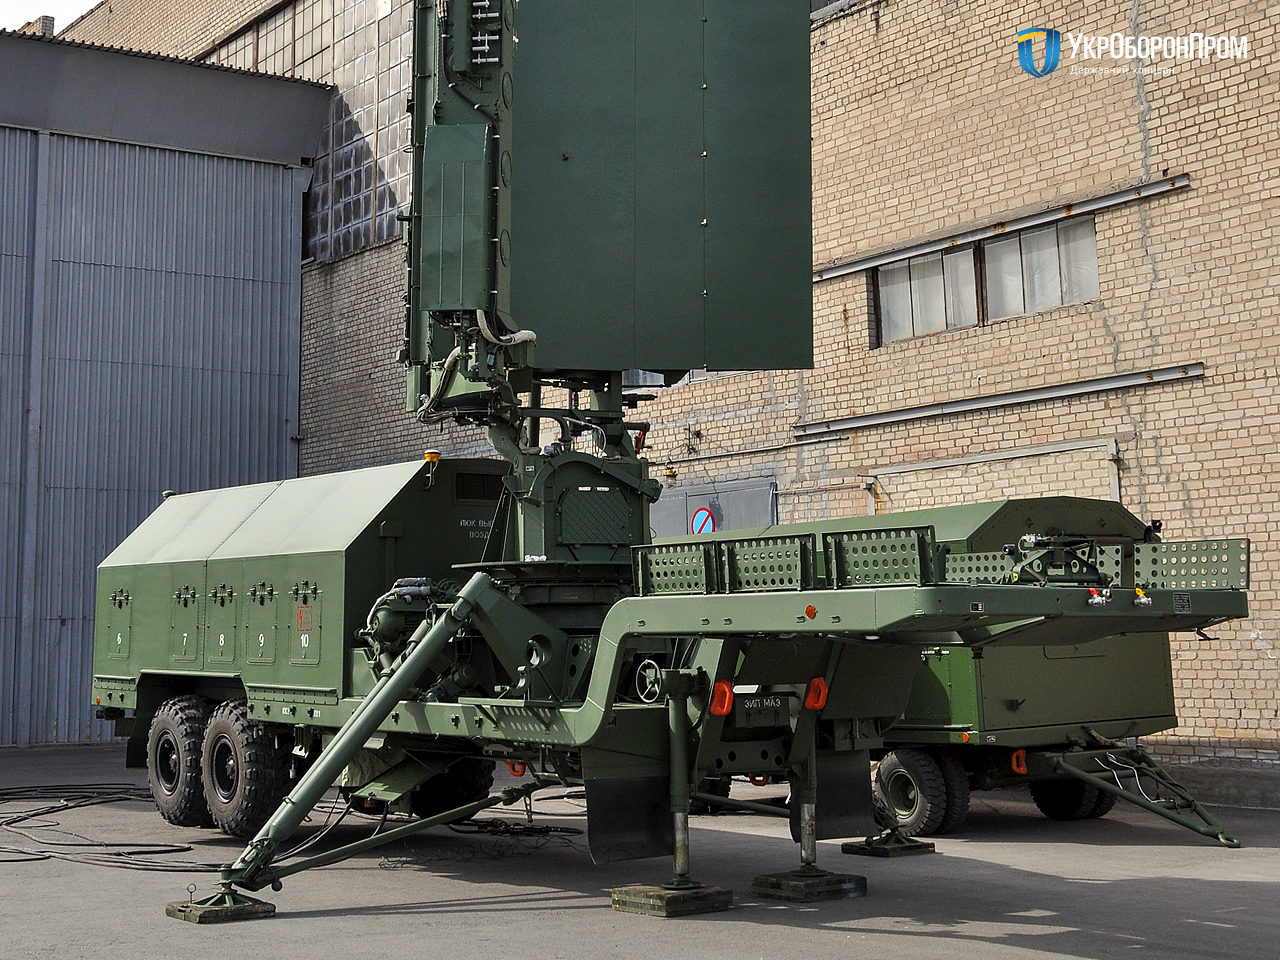 Ukroboronprom Unit Upgrades Ukrainian Radars